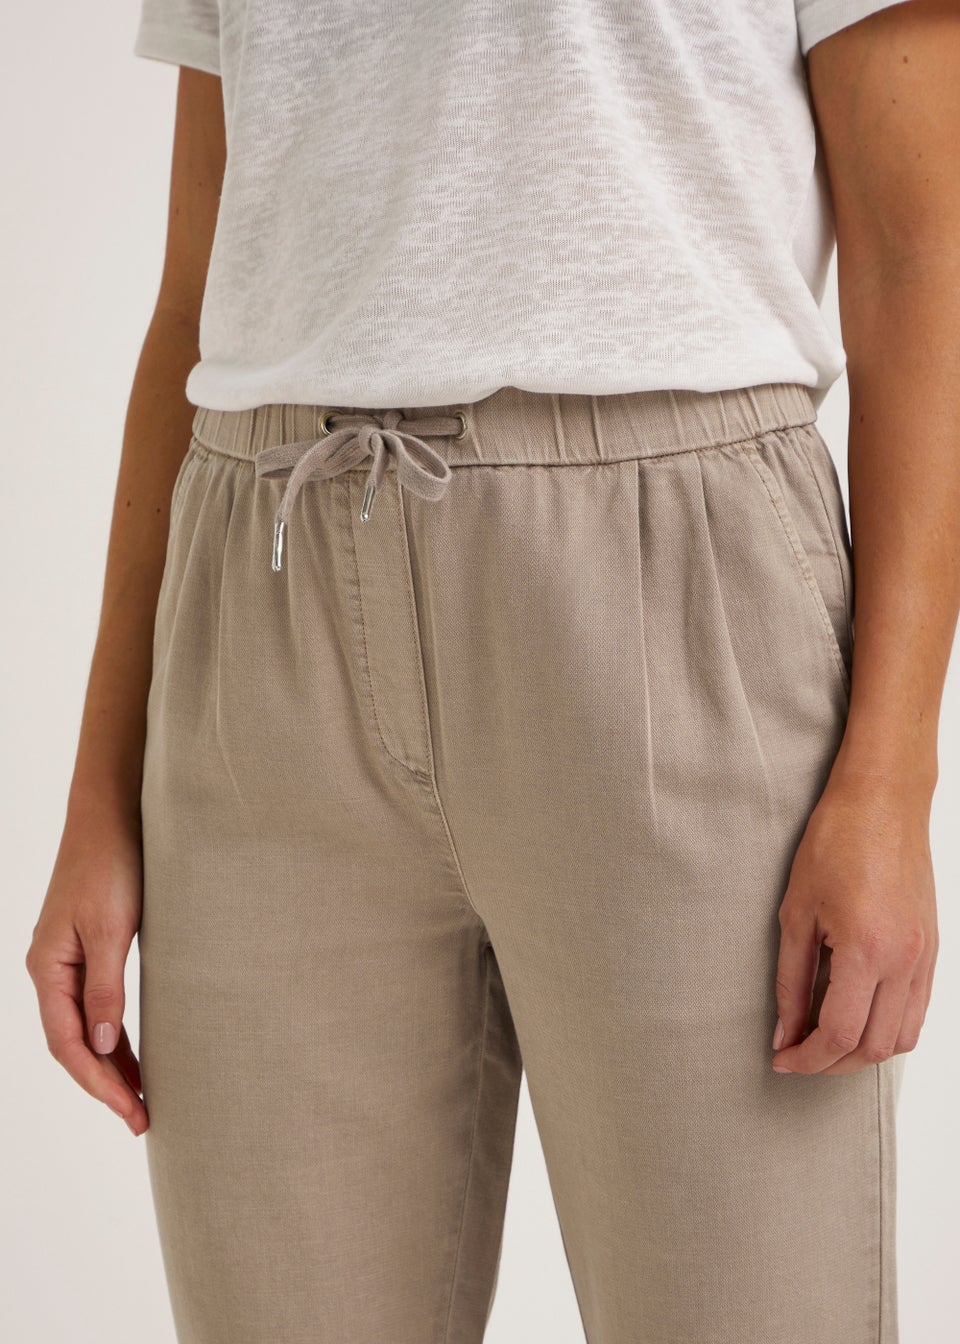 Shop Matalan Women's Linen Trousers | DealDoodle